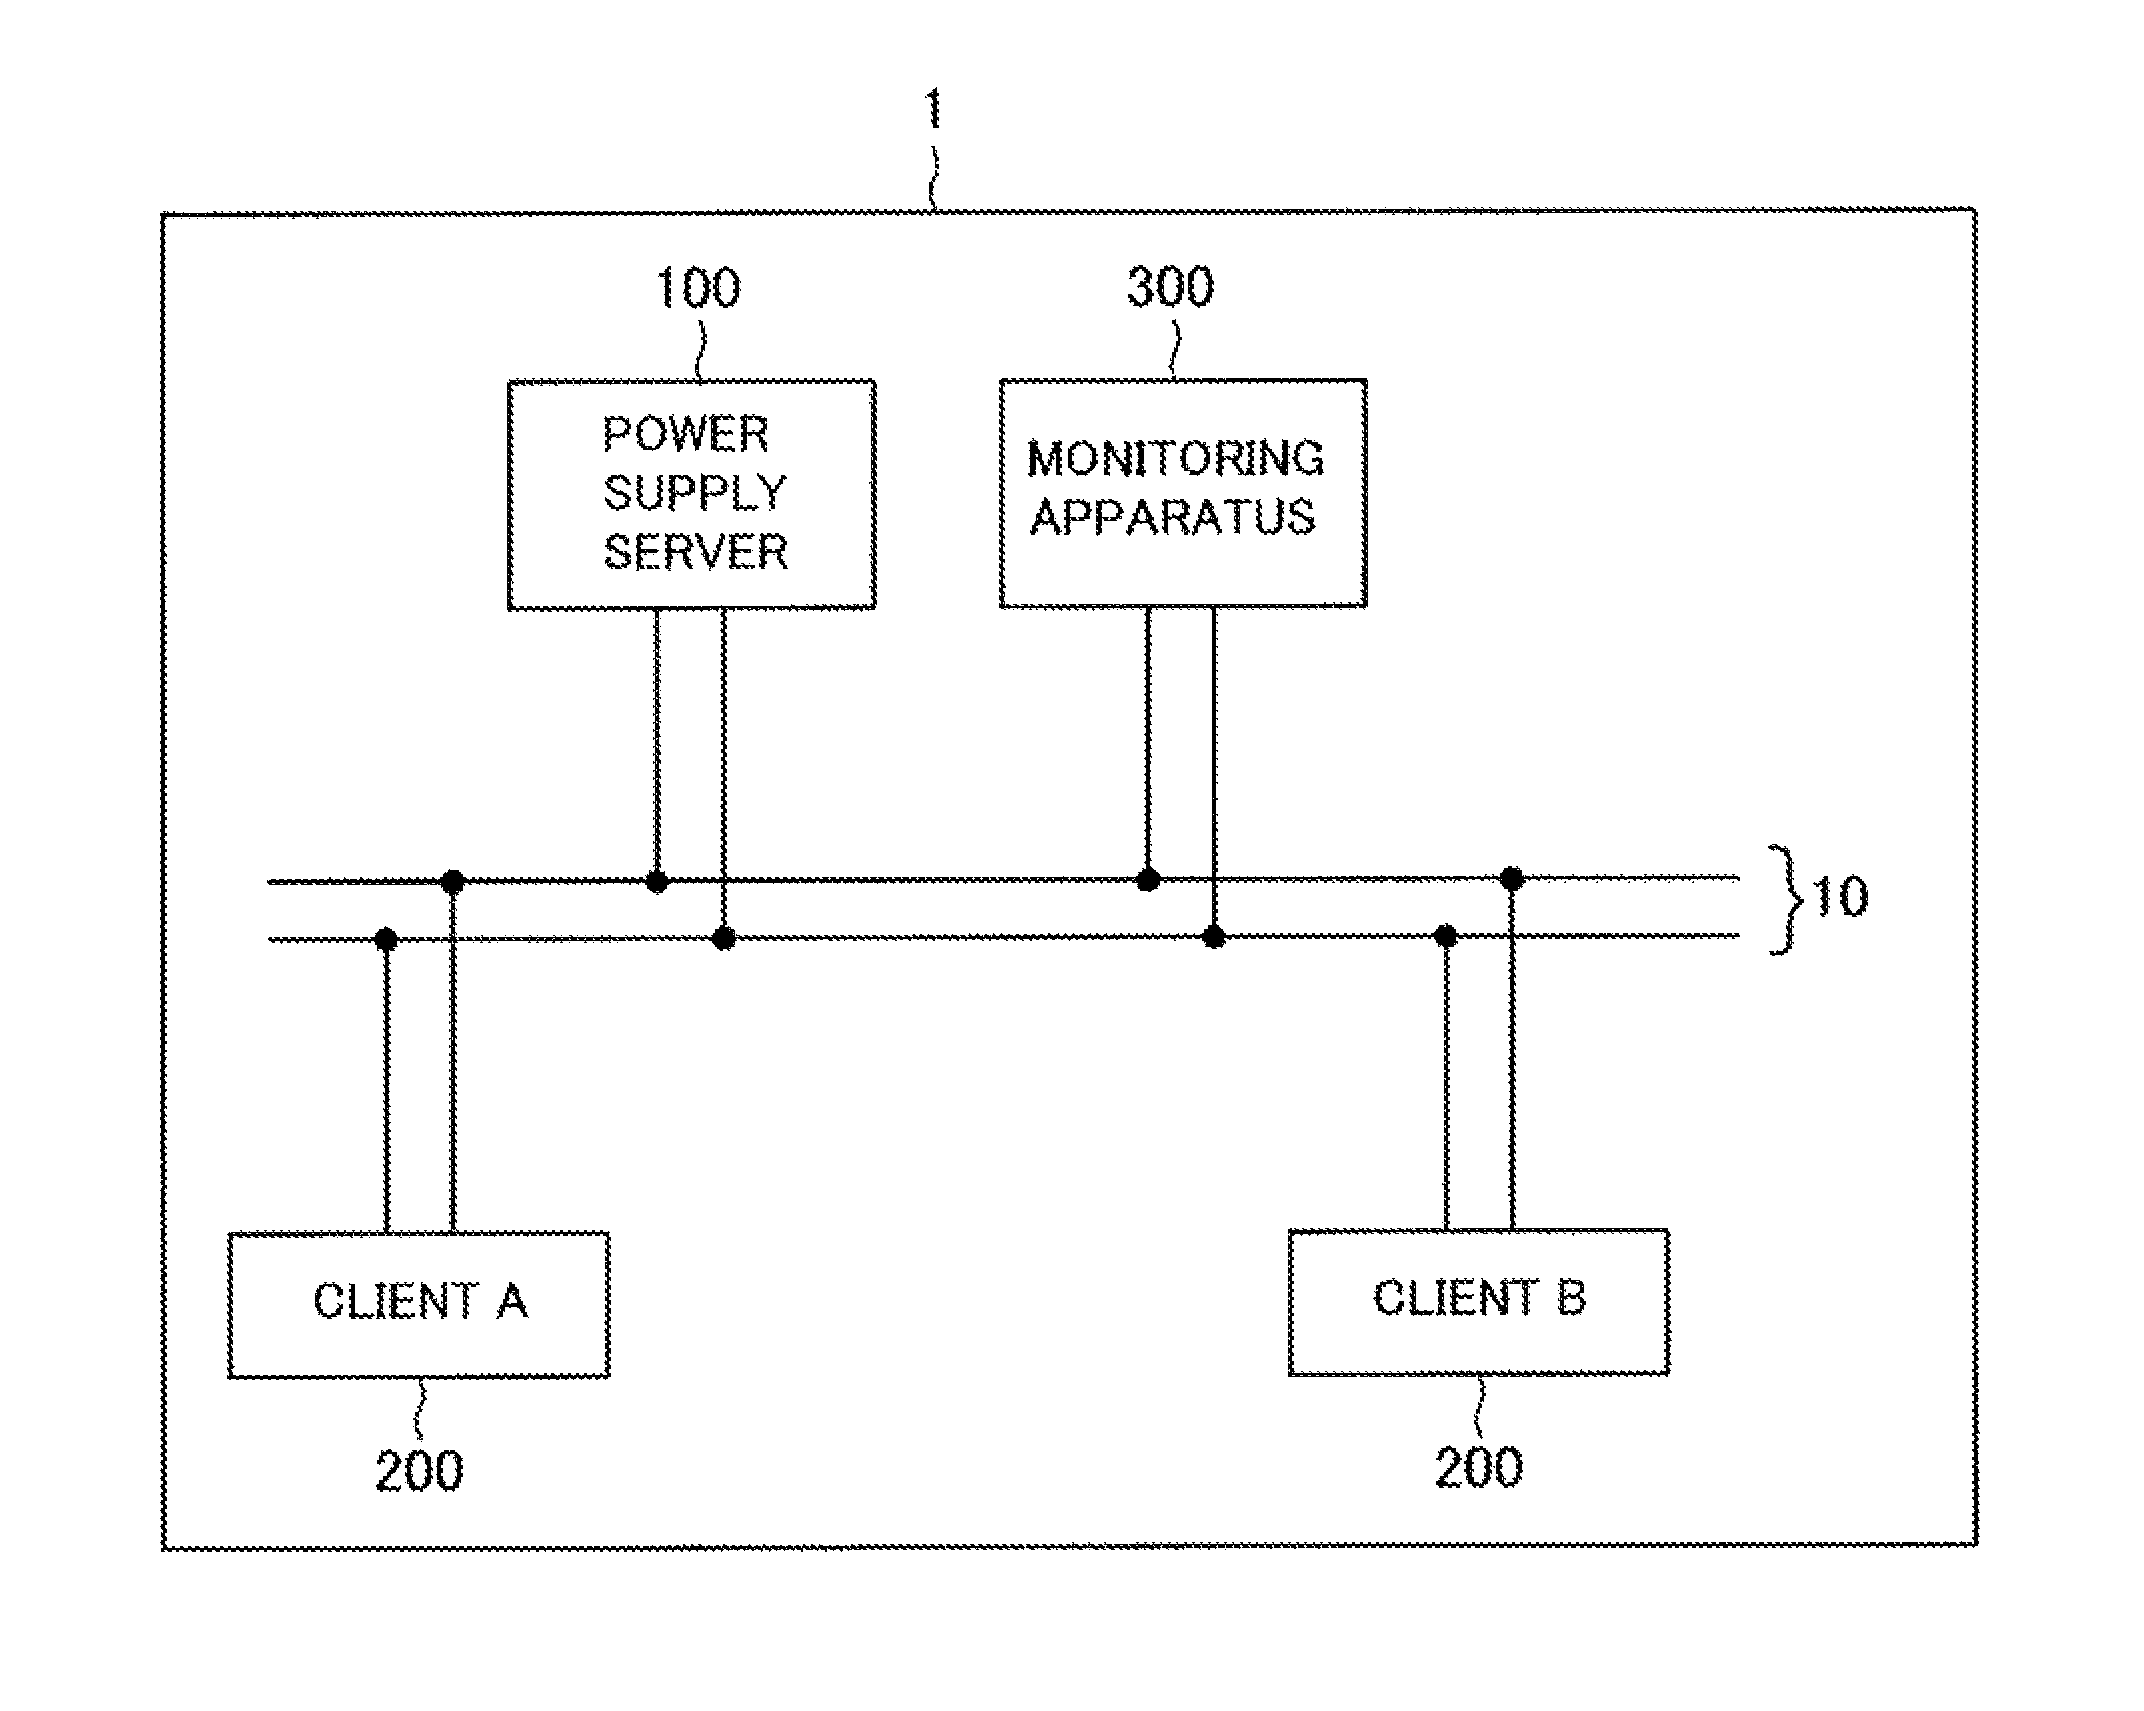 Power supplying system, monitoring apparatus, monitoring method and computer program